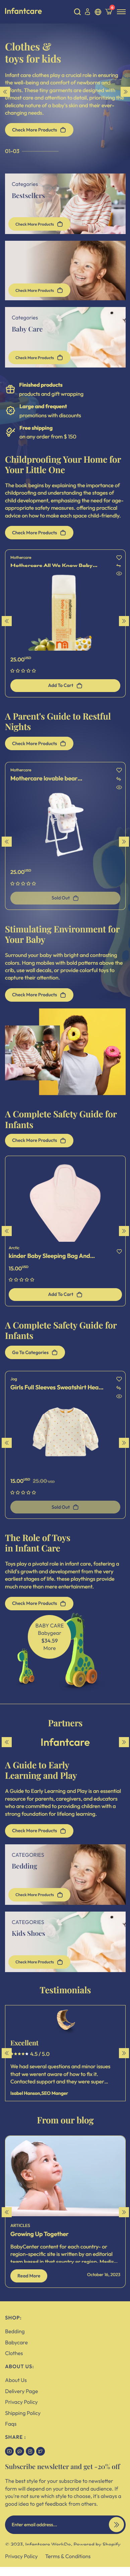 Infantcare Shopify Theme - WorkDo